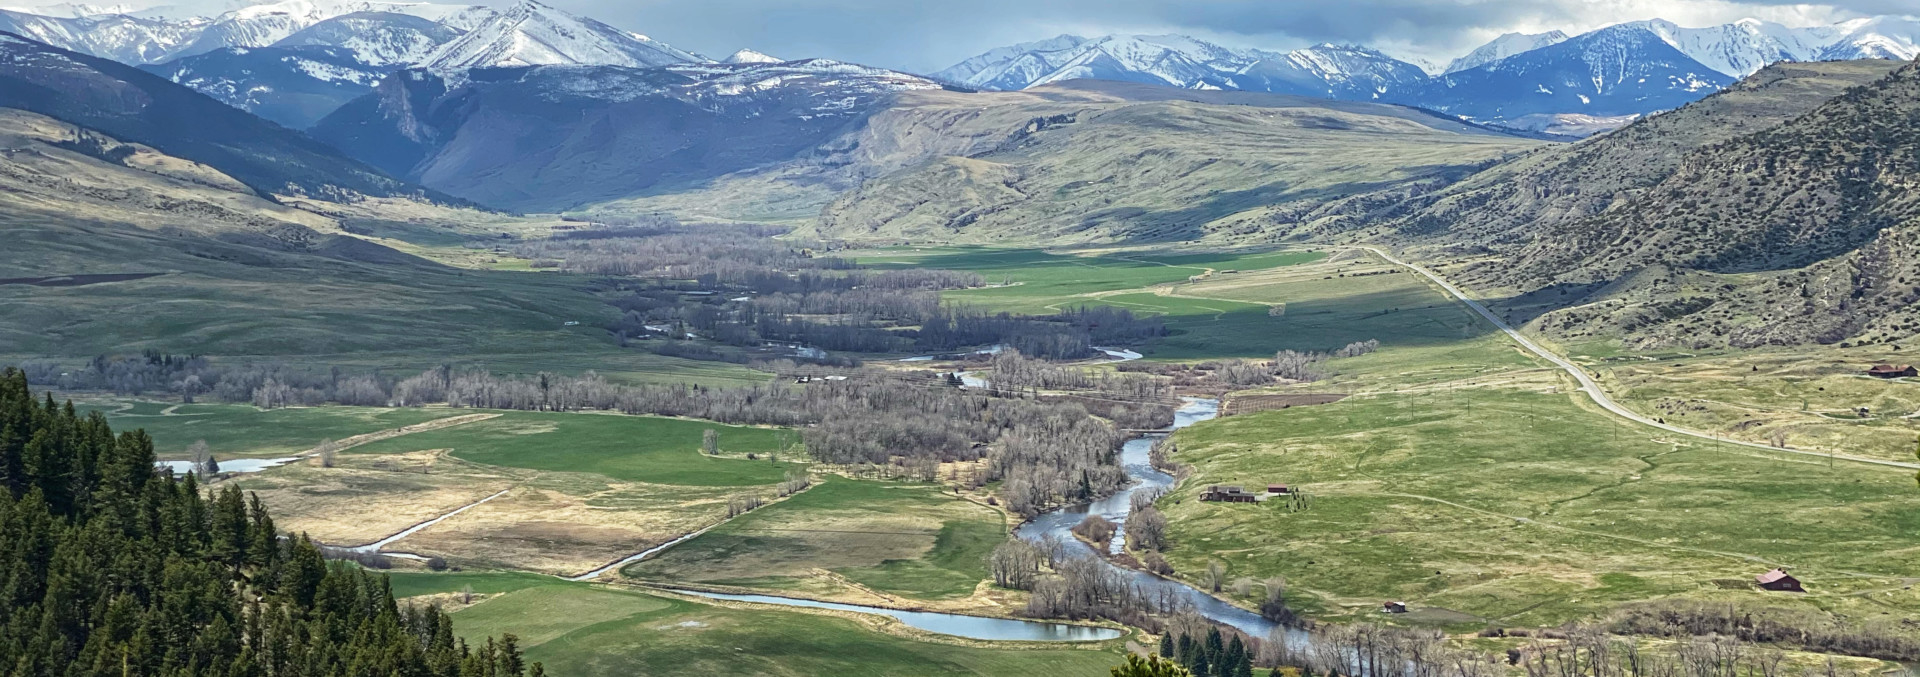 Mcleod Montana Land For Sale Montana Boulder River Vista